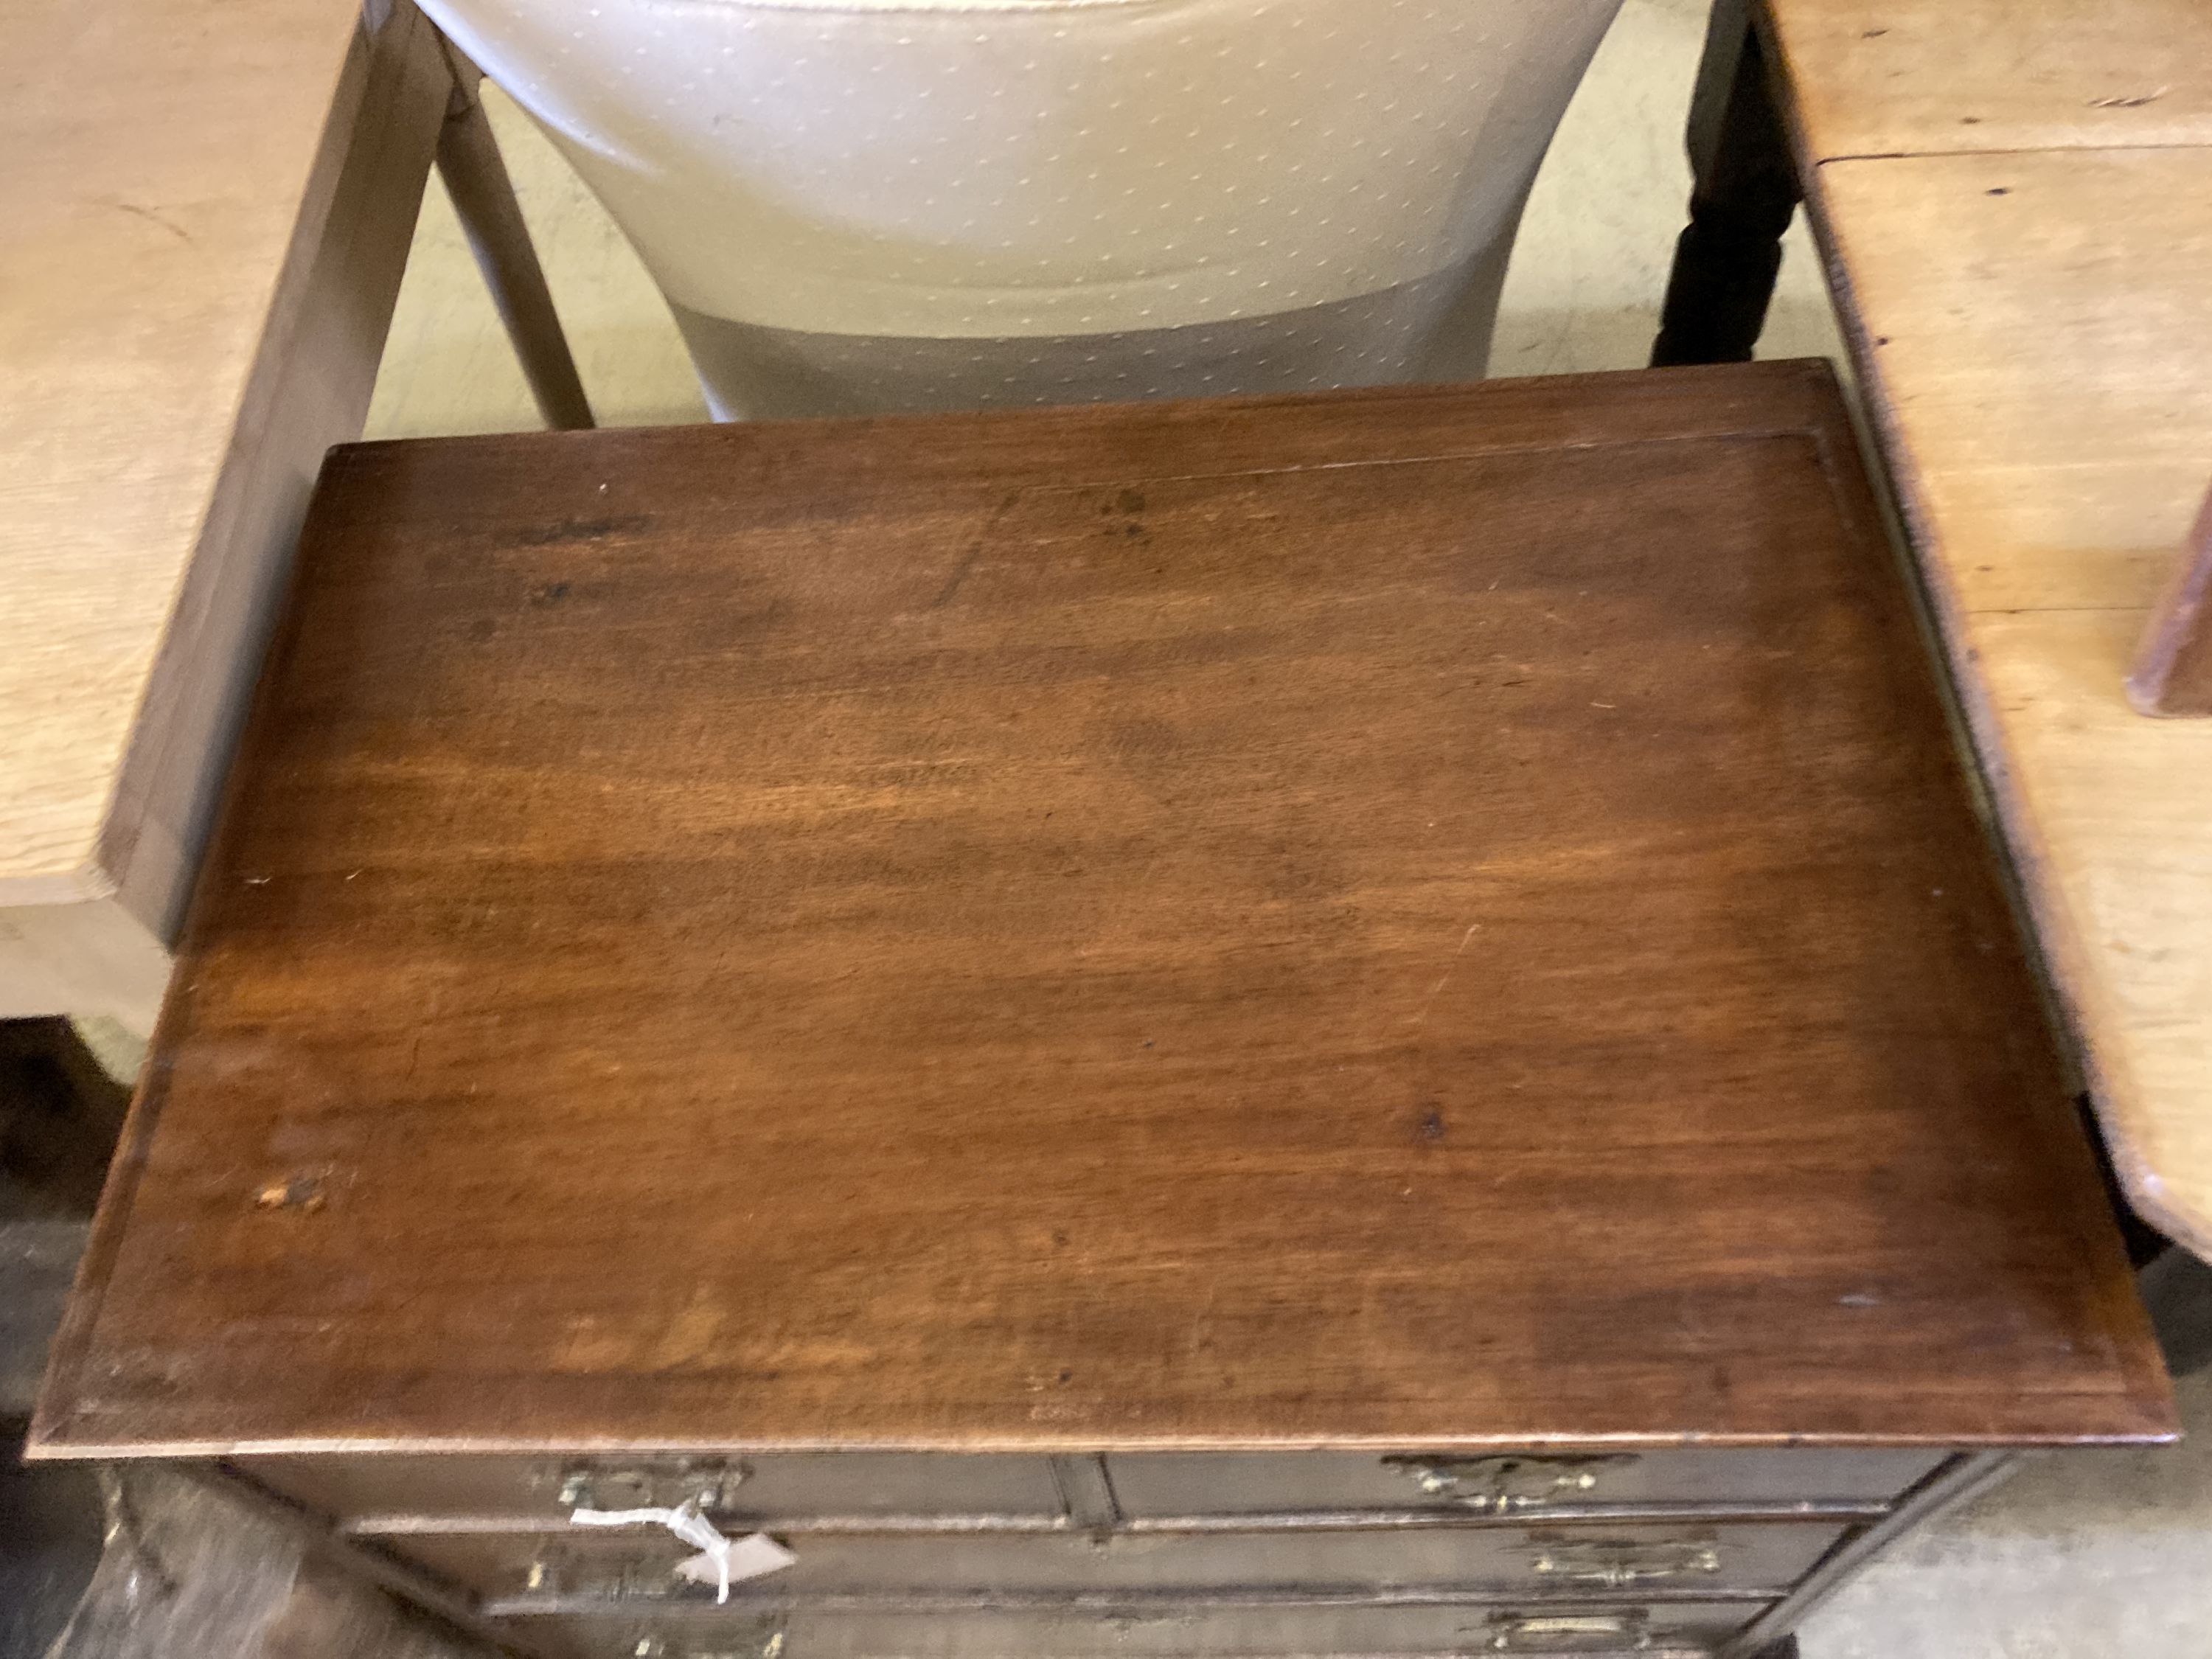 A small 18th century style chest, American walnut, width 70cm, depth 48cm, height 68cm